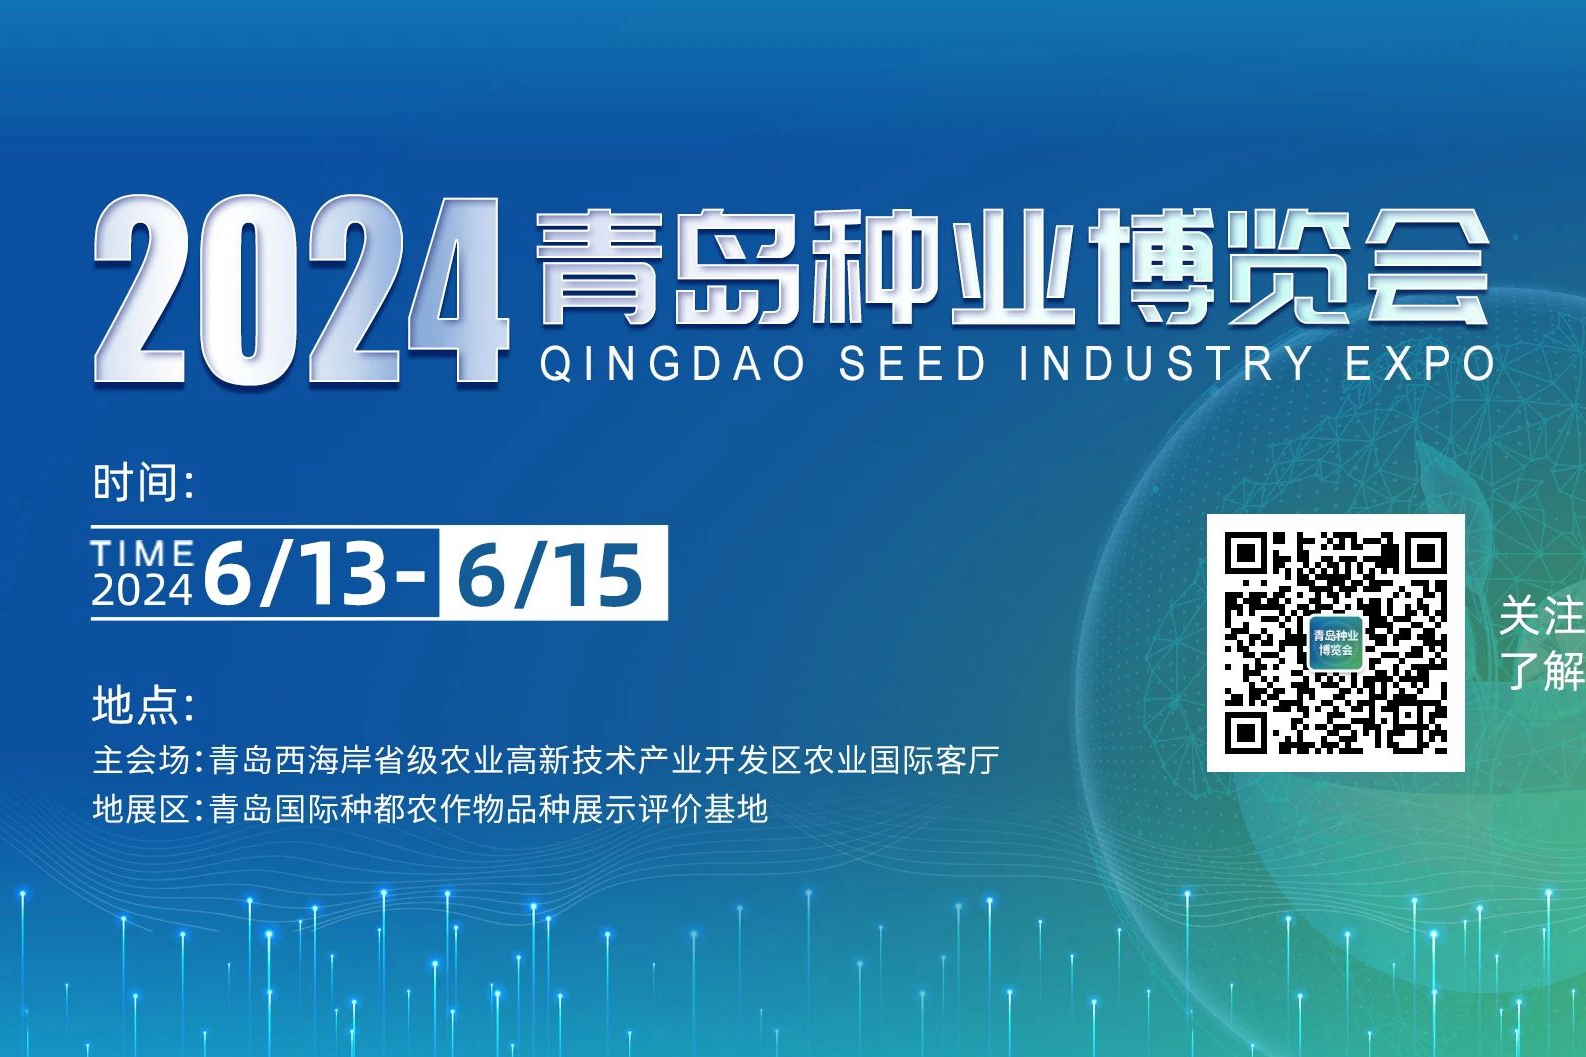 Qingdao expo sows global innovation, seeds international ties